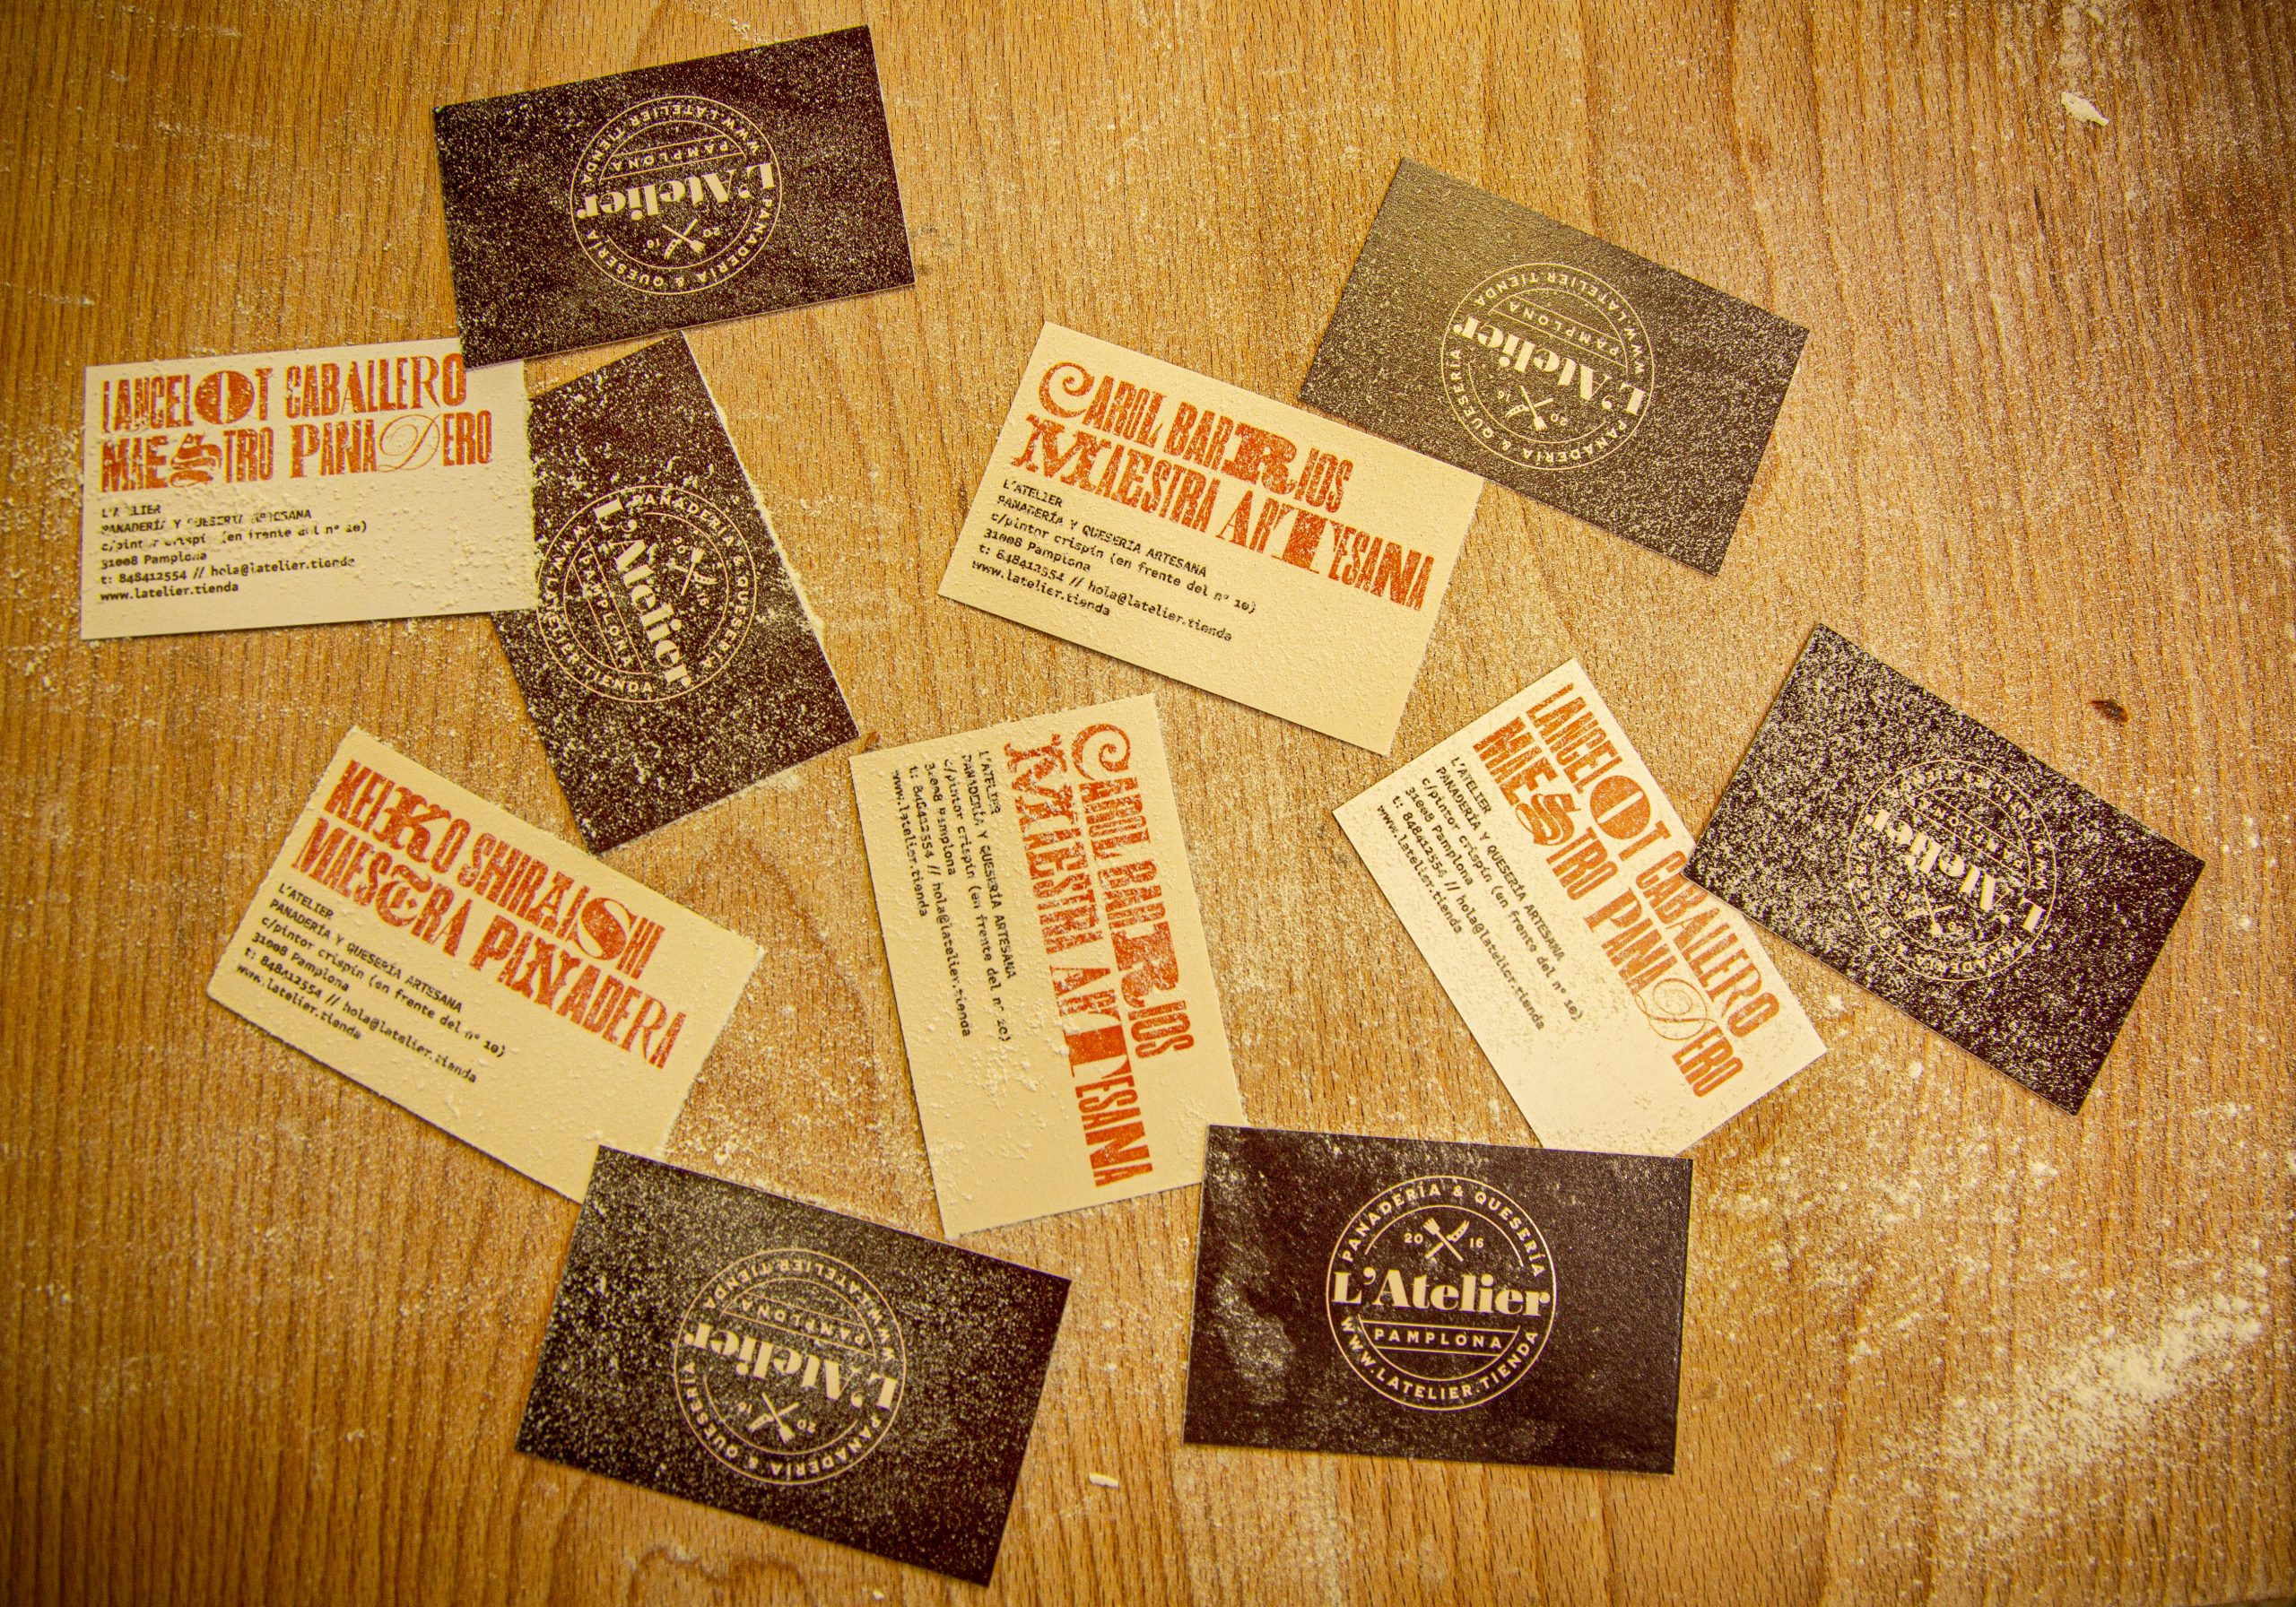 Imagen cenital de las tarjetas impresas de L'Atelier con la tipografía corporativa Drunken Master.